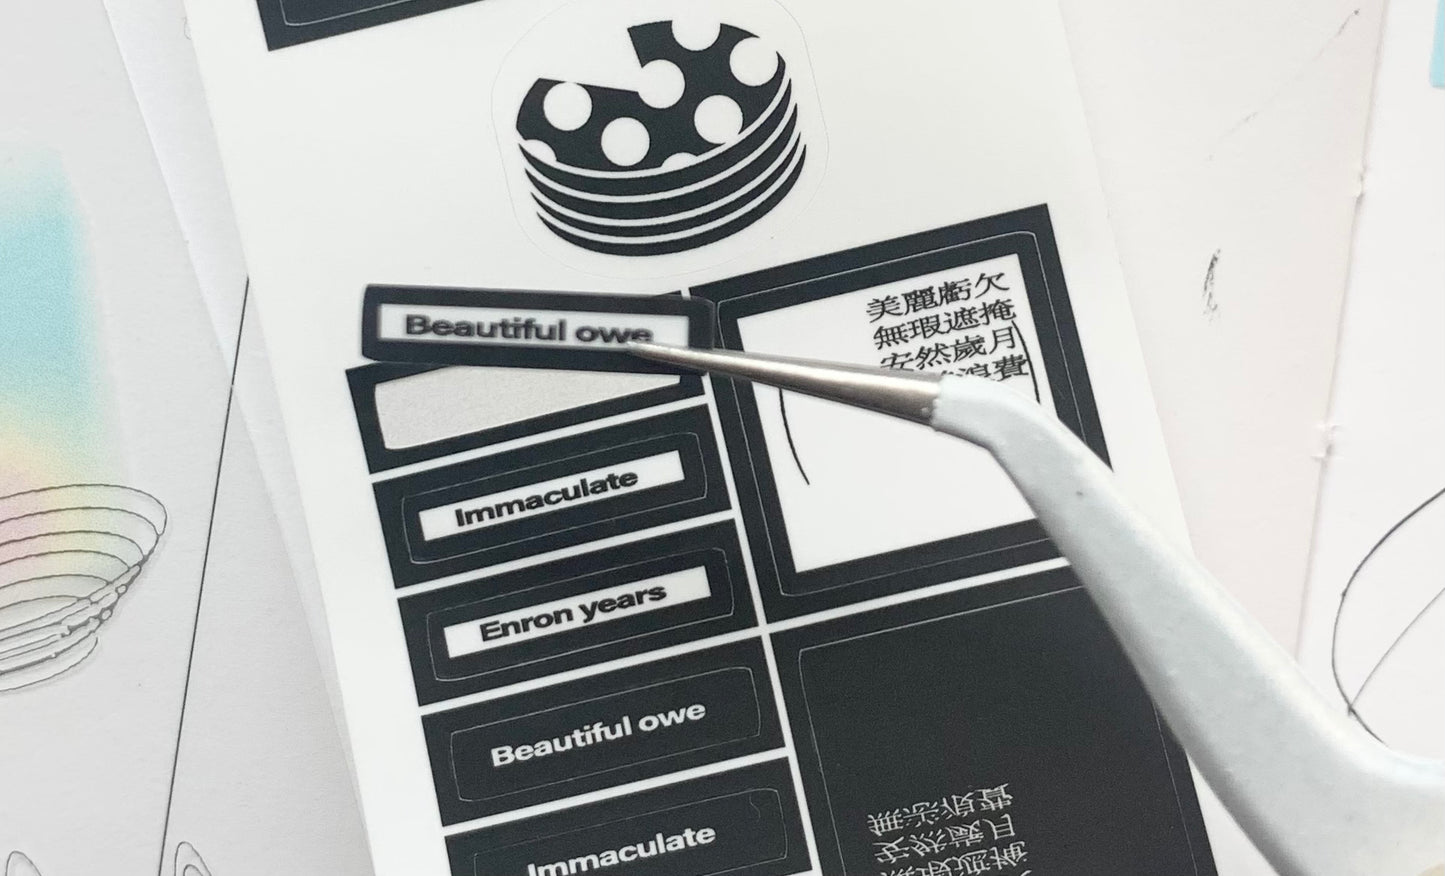 CG - Black Hole Travel Guide | 4.5cm Die Cut Sticker Tape | Release Paper